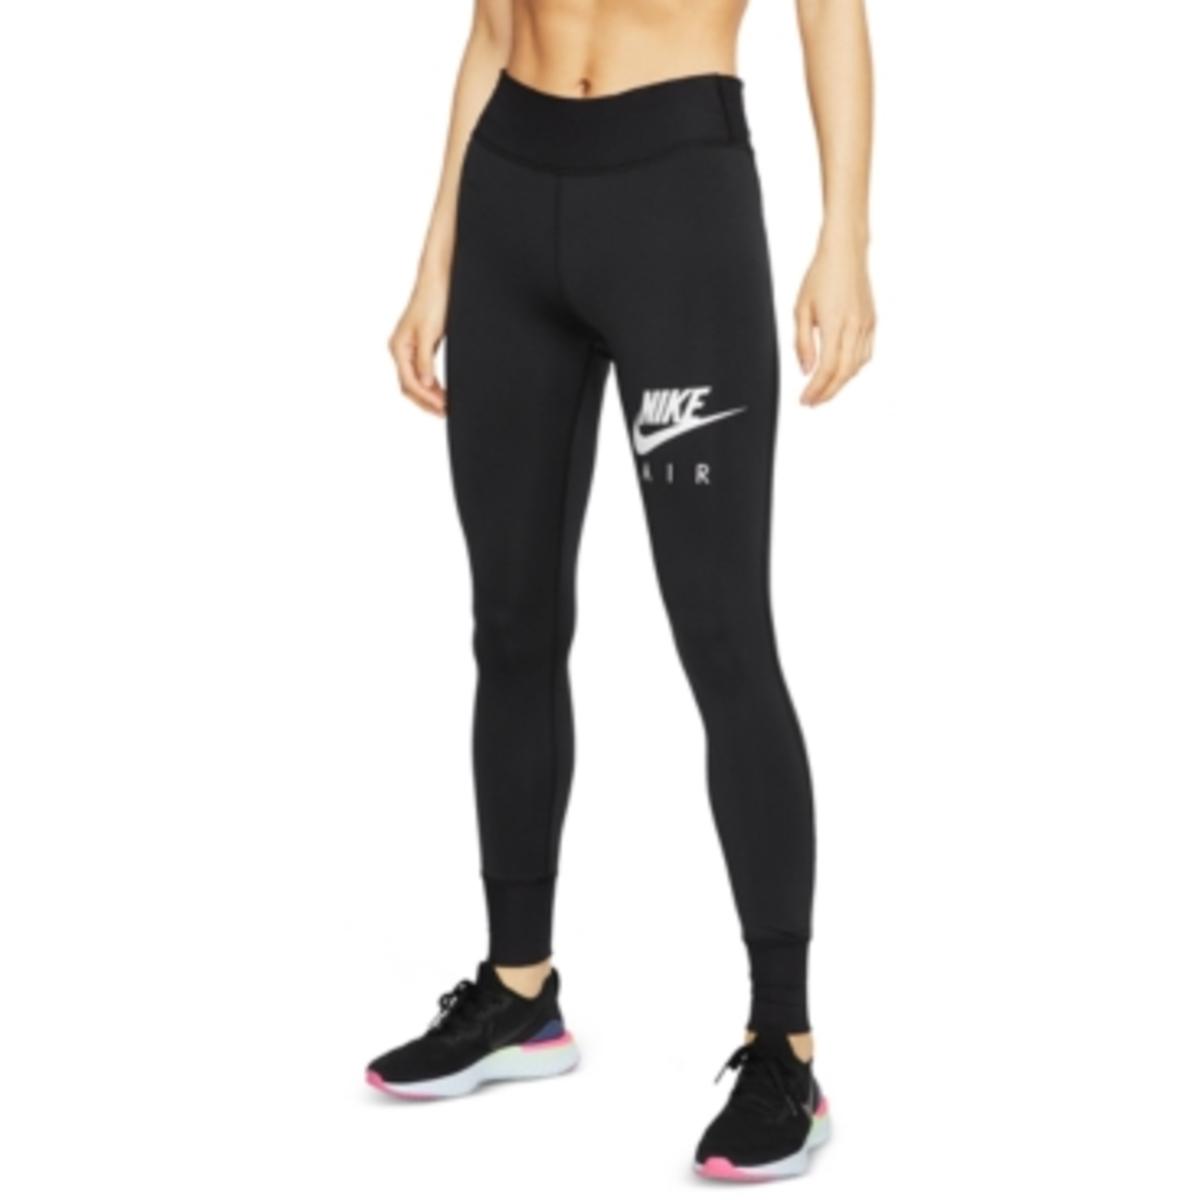 Nike Womens Black Workout Fitness Running Athletic Leggings XS BHFO ...